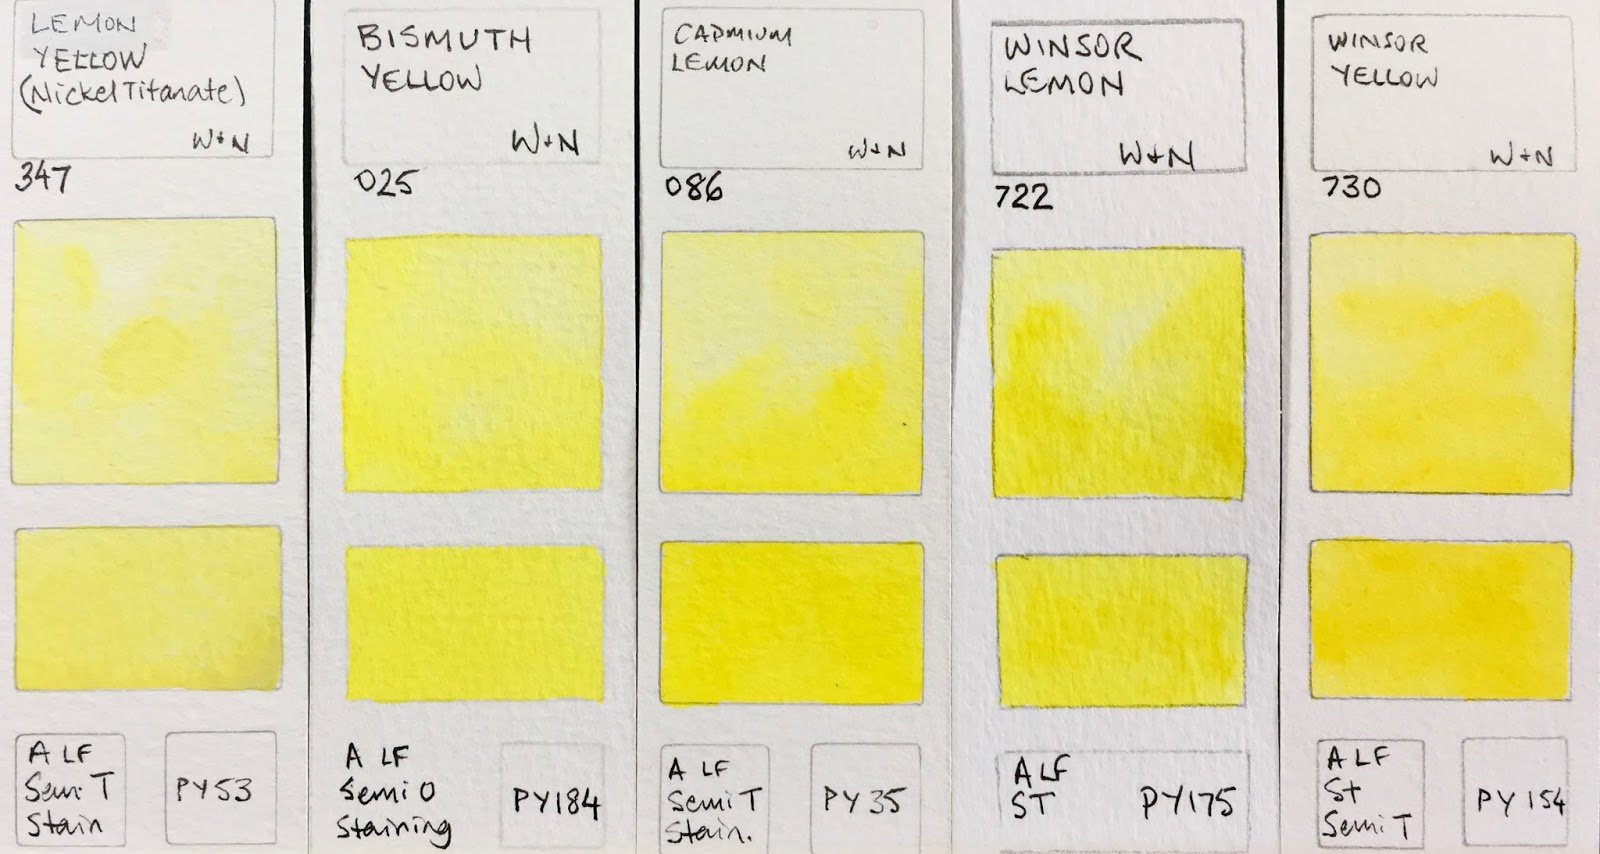 Winsor Newton Colour Chart Watercolour